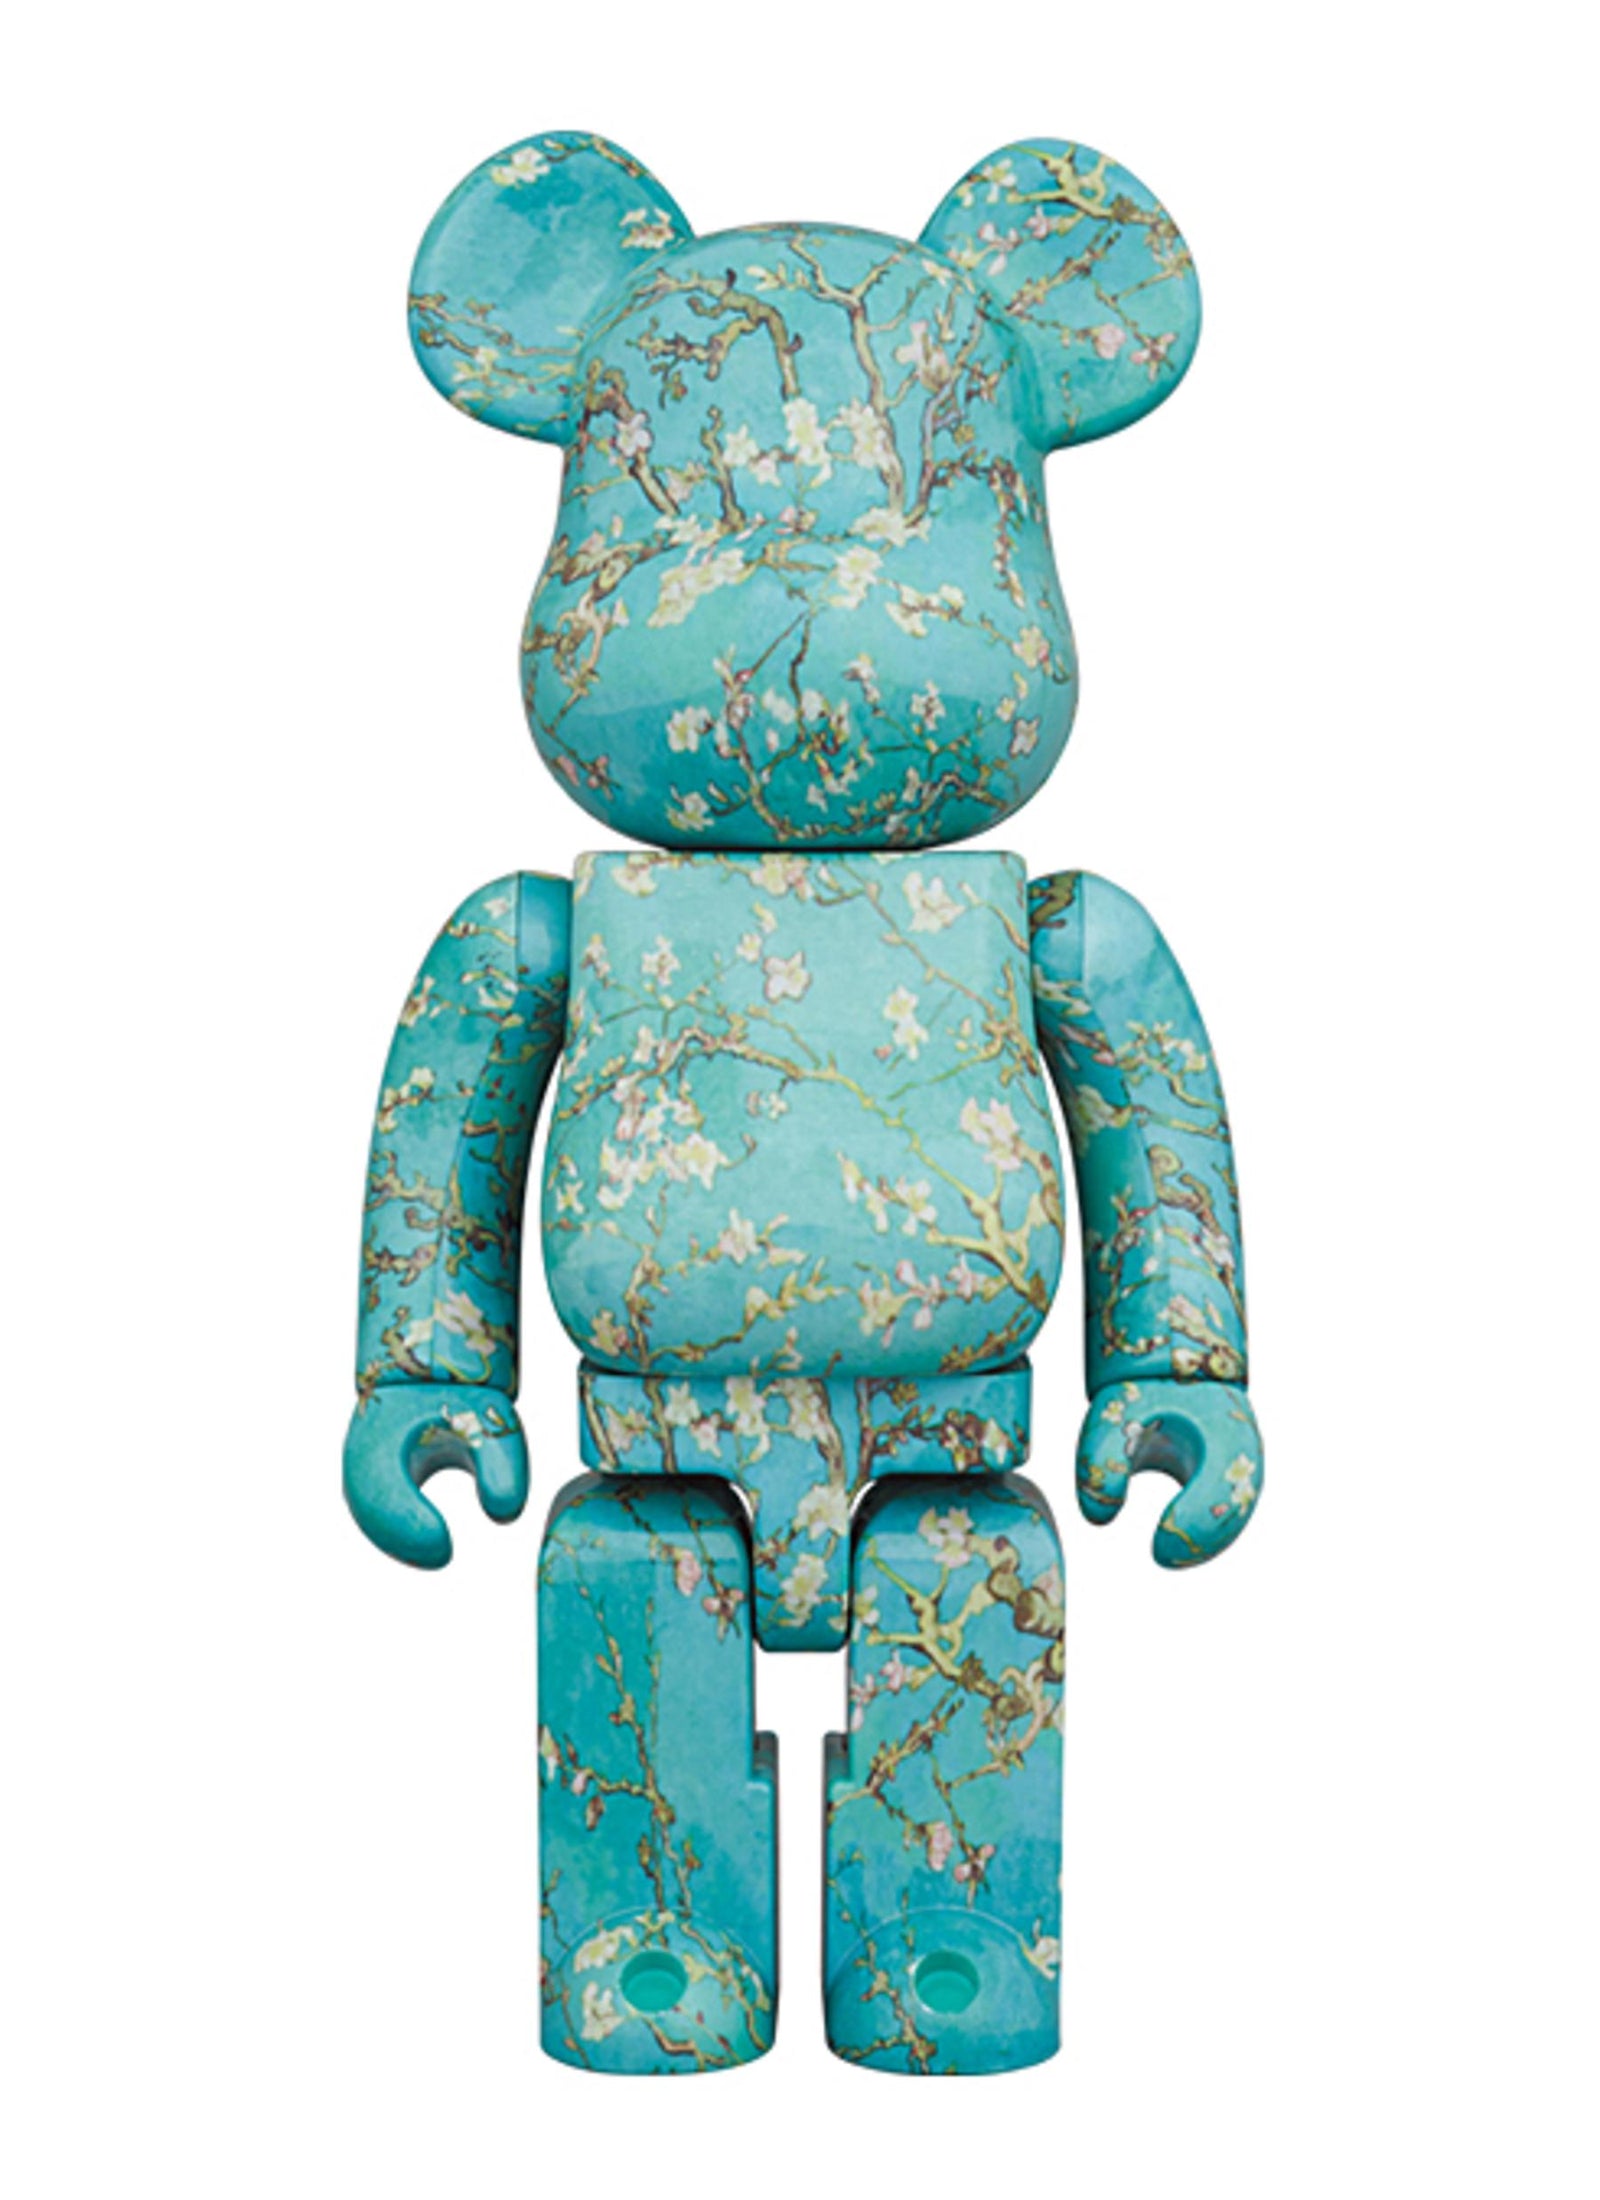 1000% Bearbrick - Medicom Toy - Designer Toy - Centrepieces 